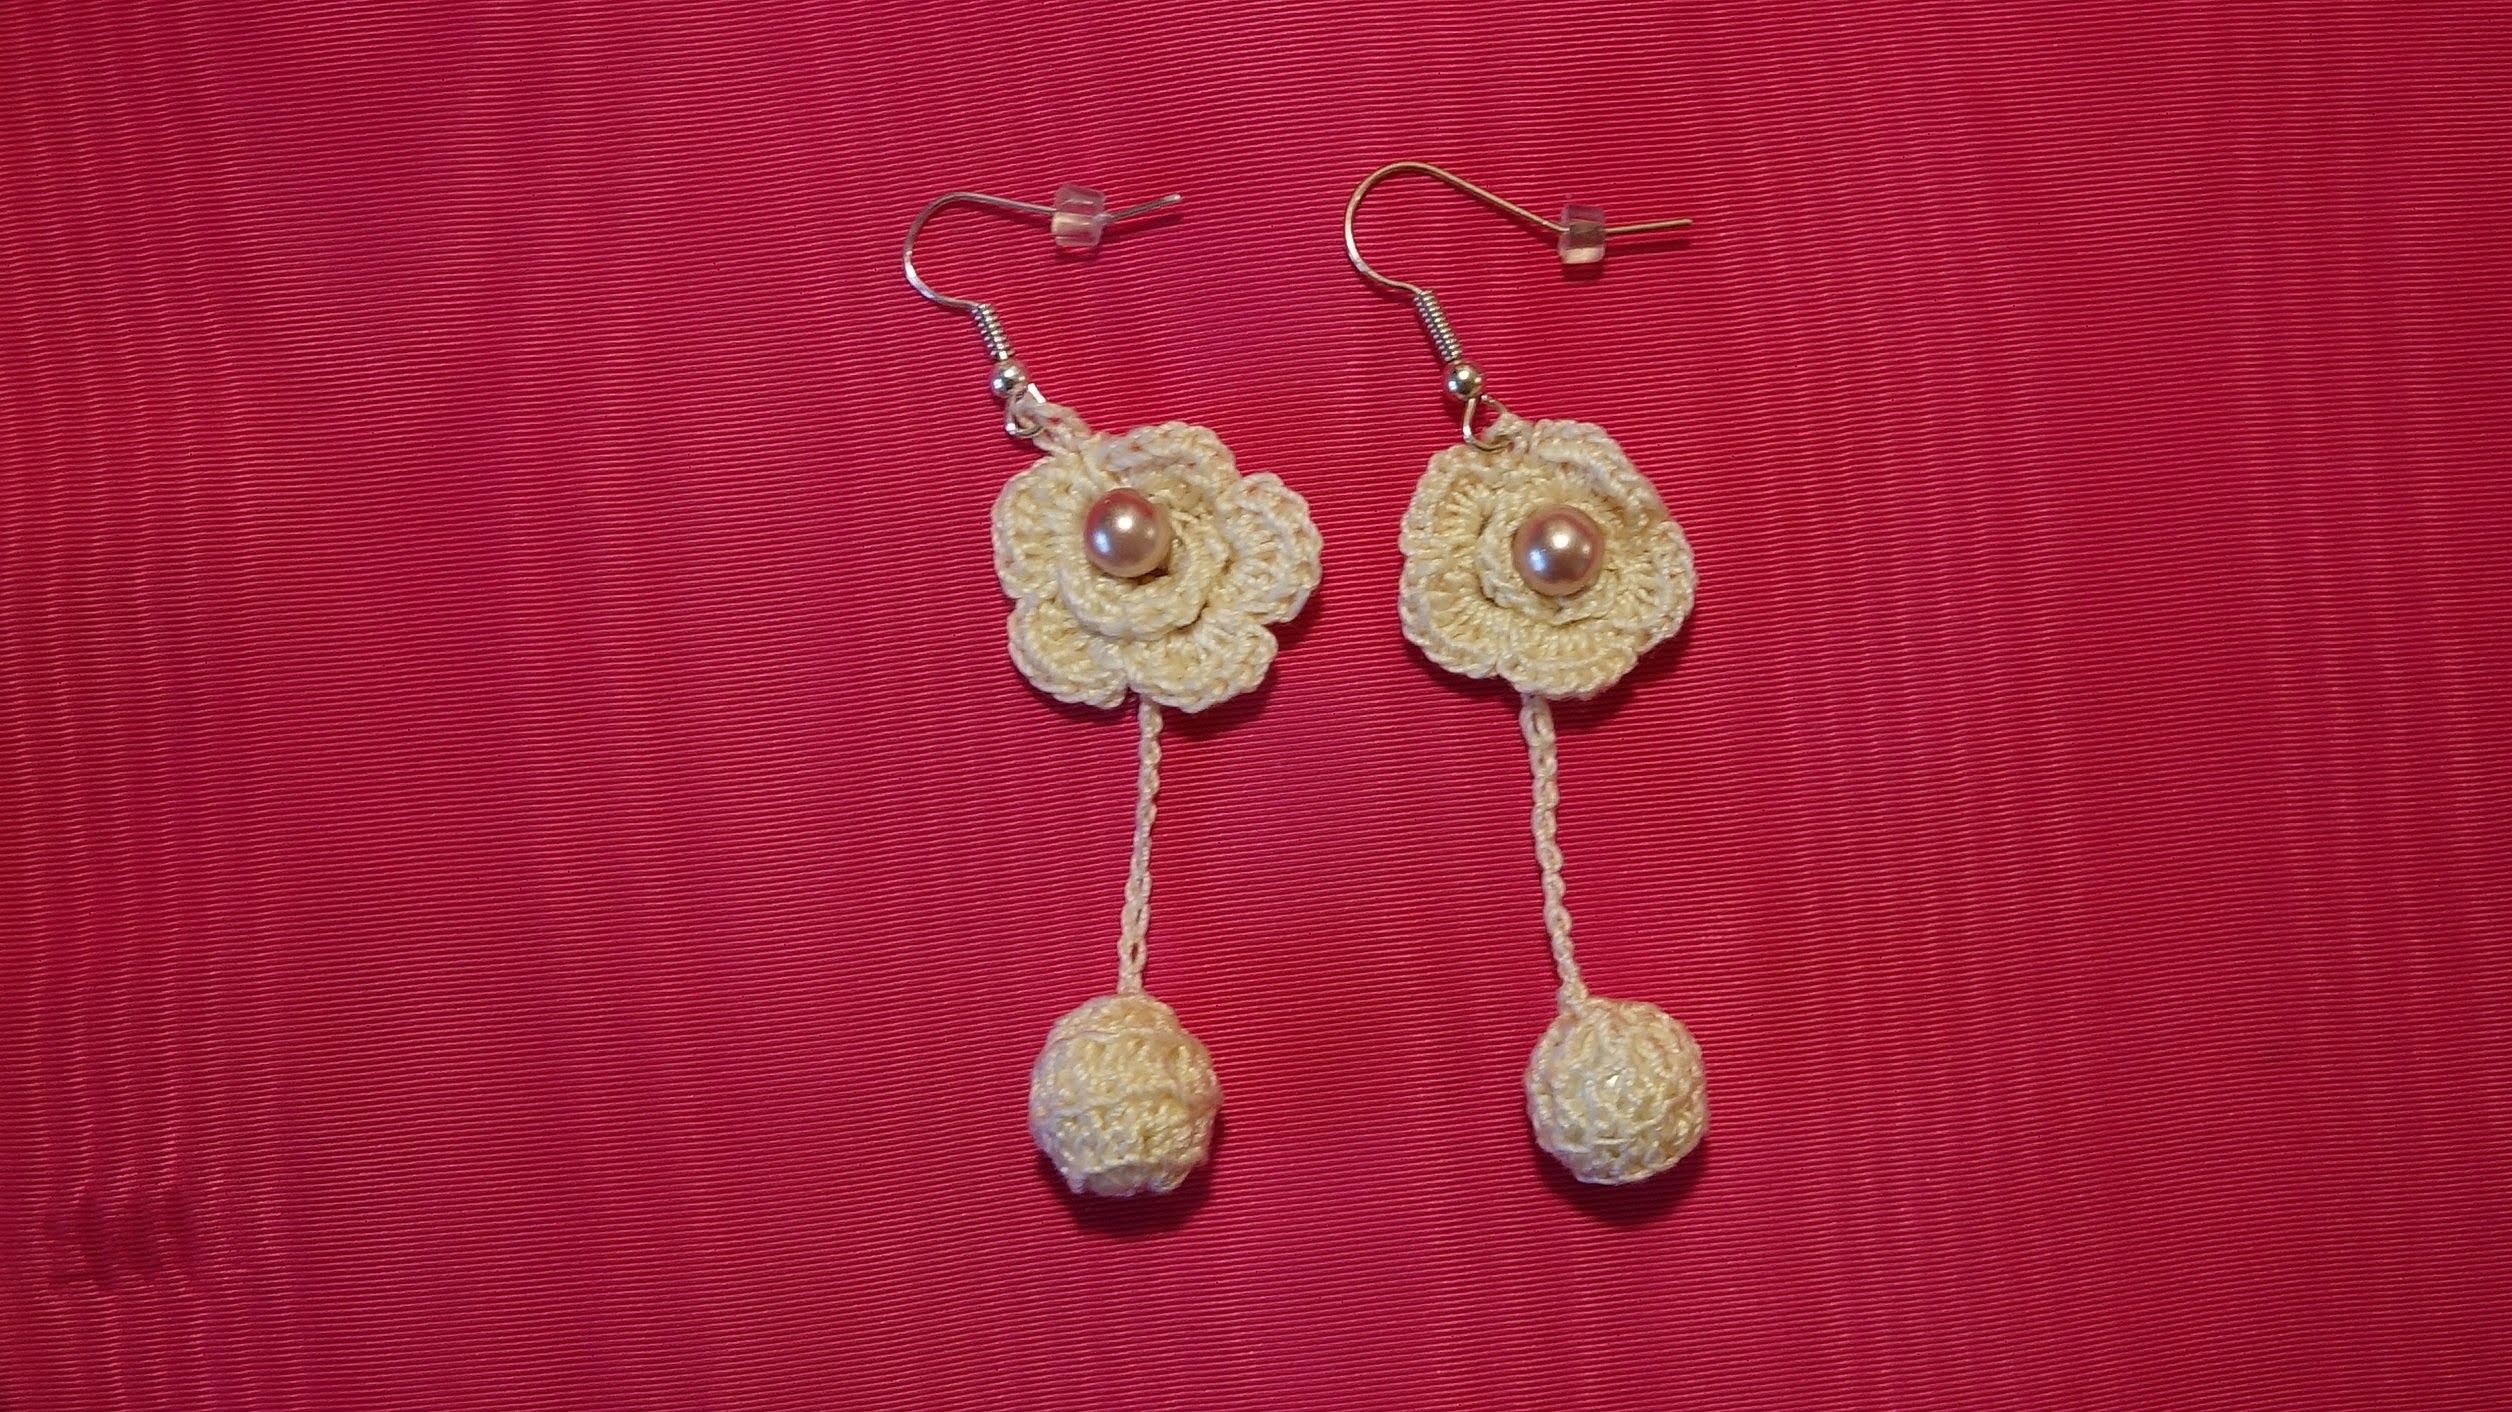 Como hacer pendientes o aretes tejidos a crochet paso a paso.  how to make chochet earings